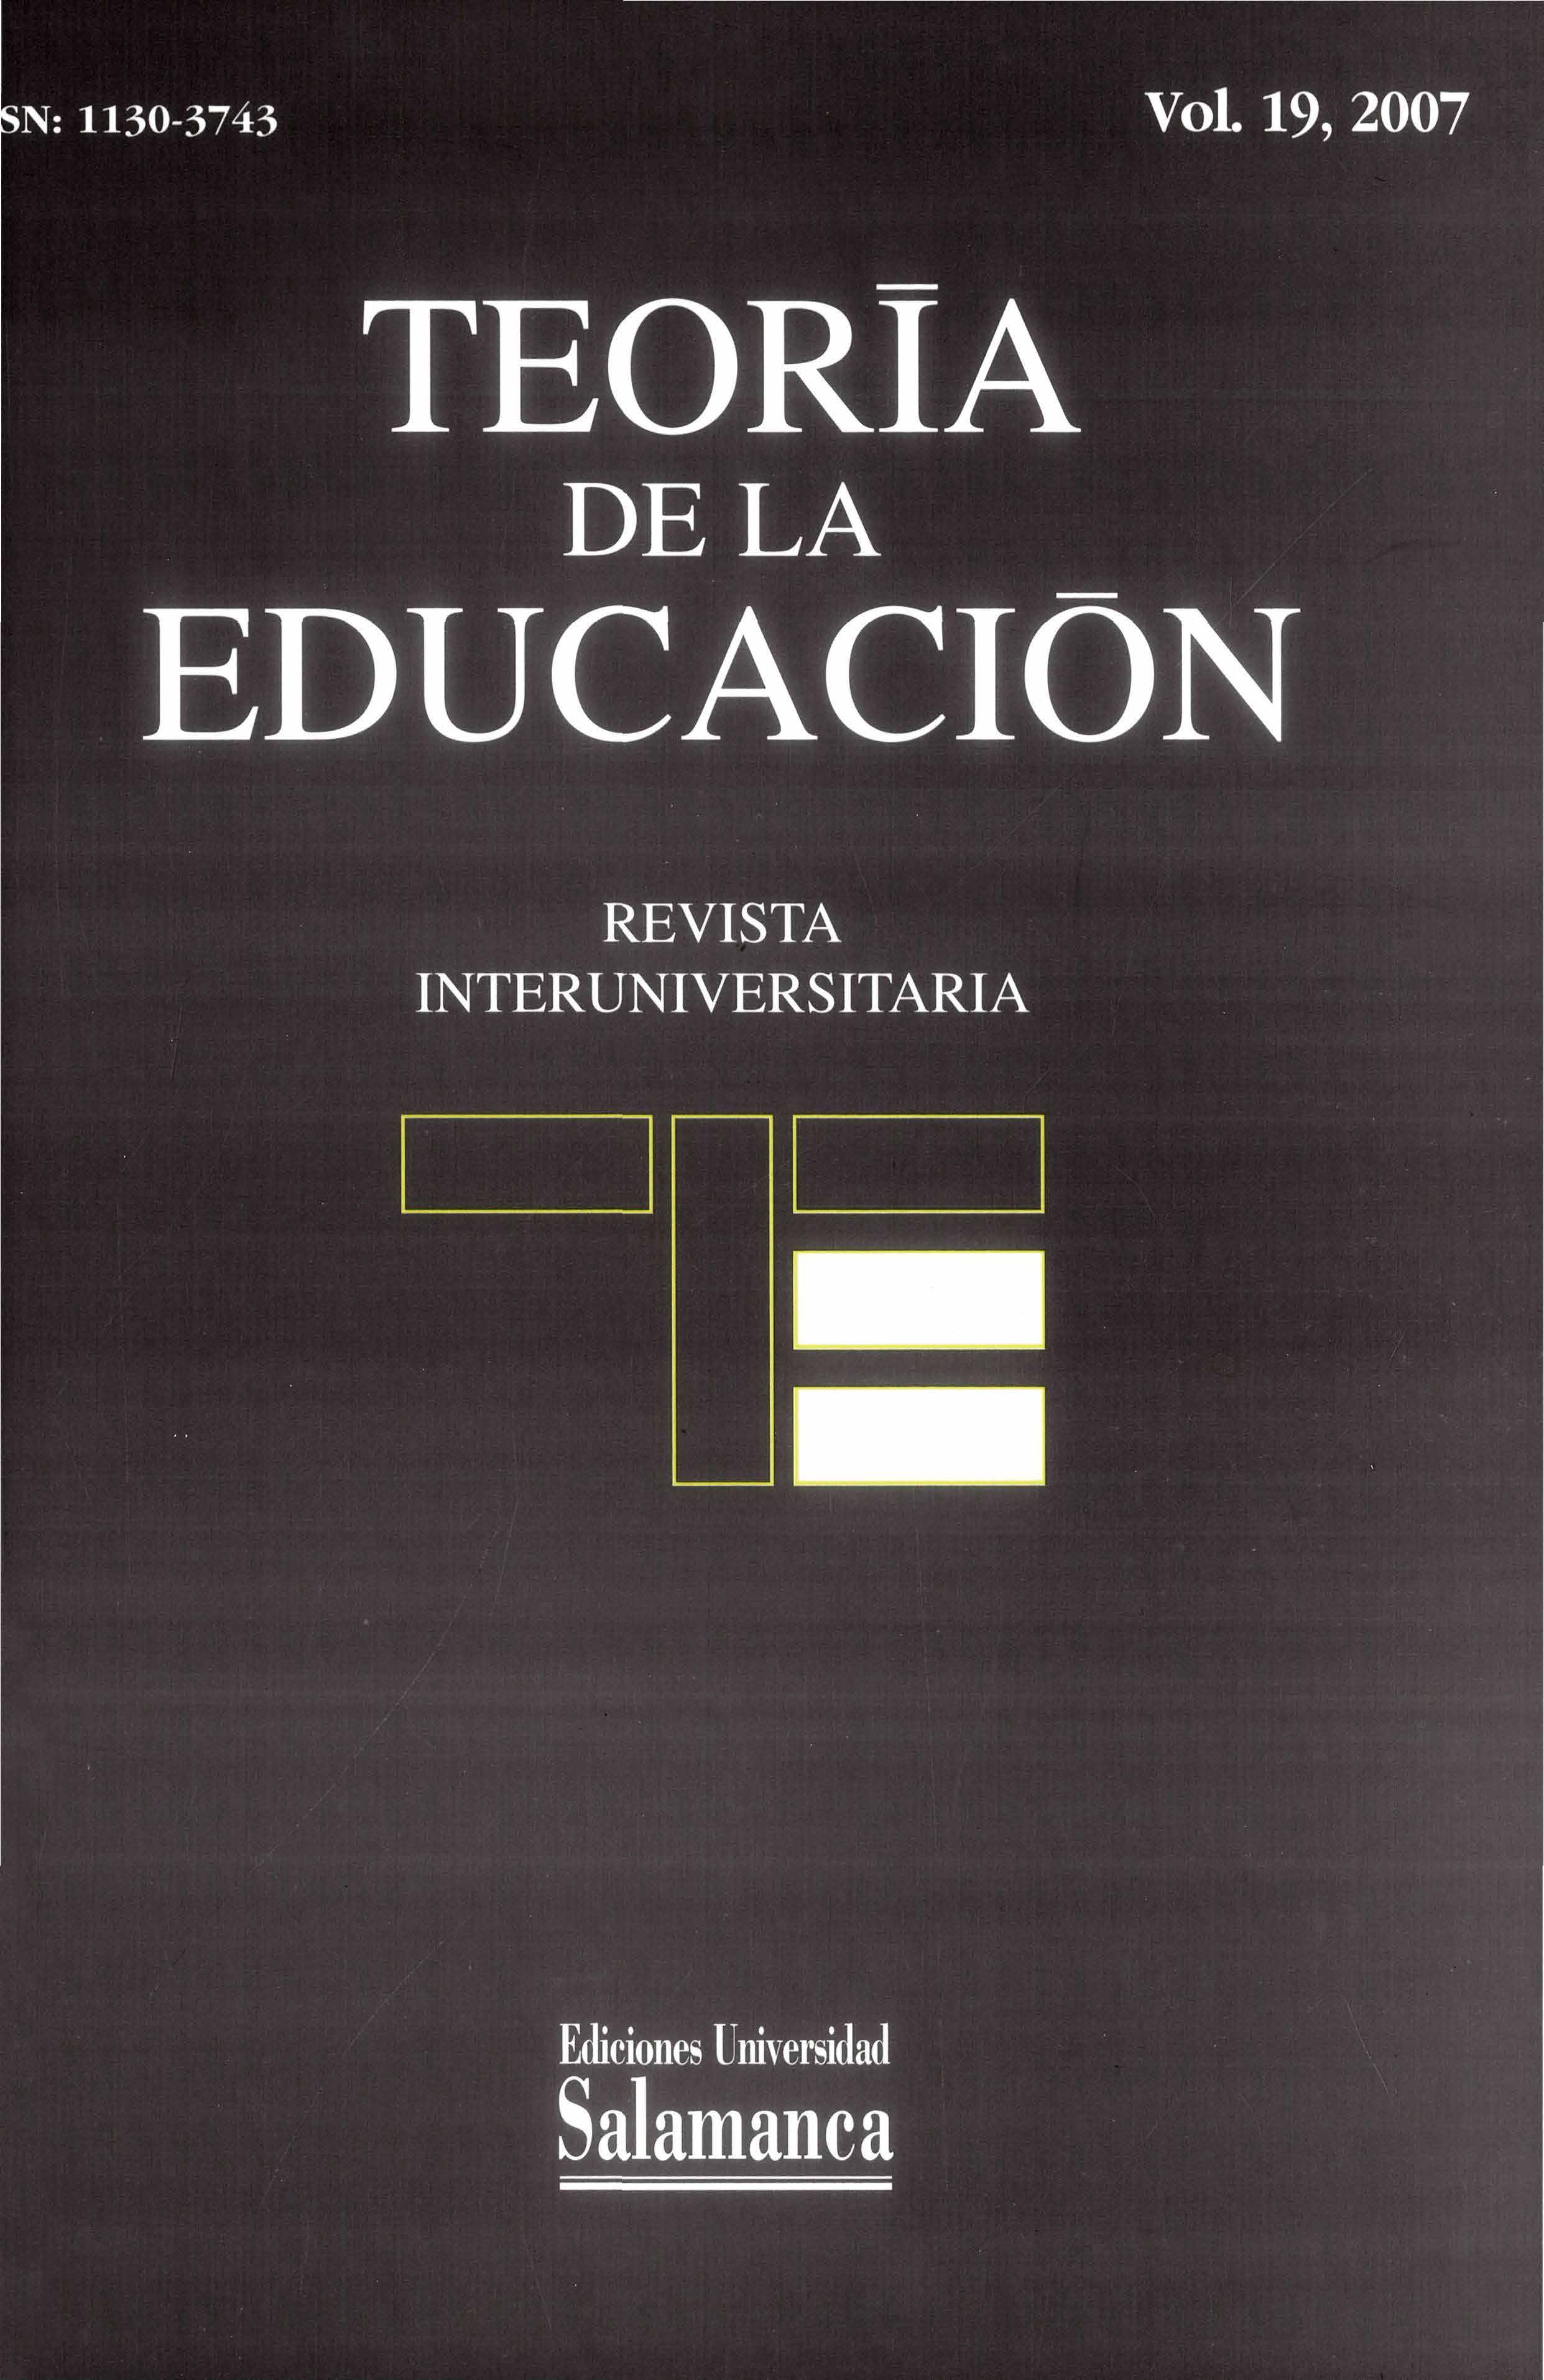                         Ver Vol. 19 (2007)
                    